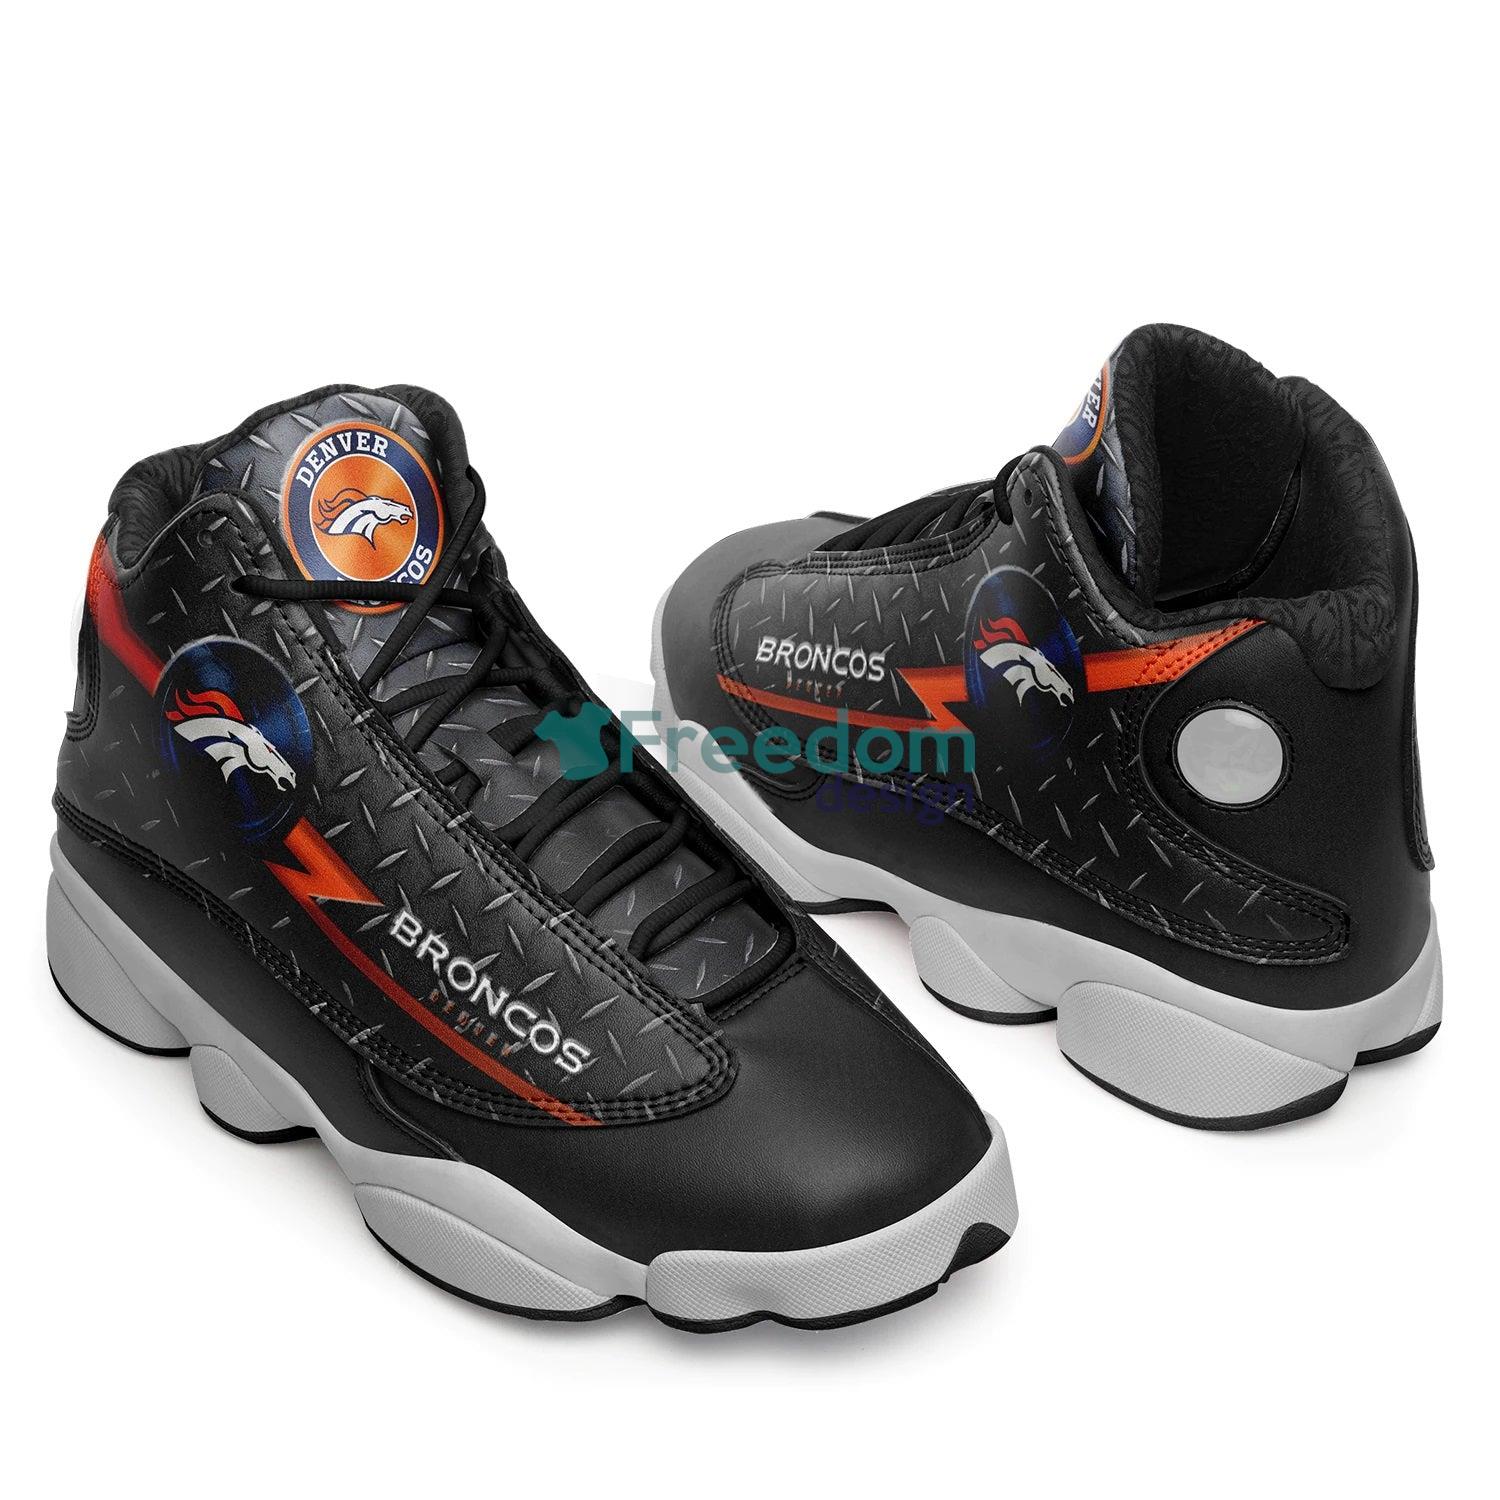 Denver Broncos Team Black Air Jordan 13 Sneaker Shoes For Fans